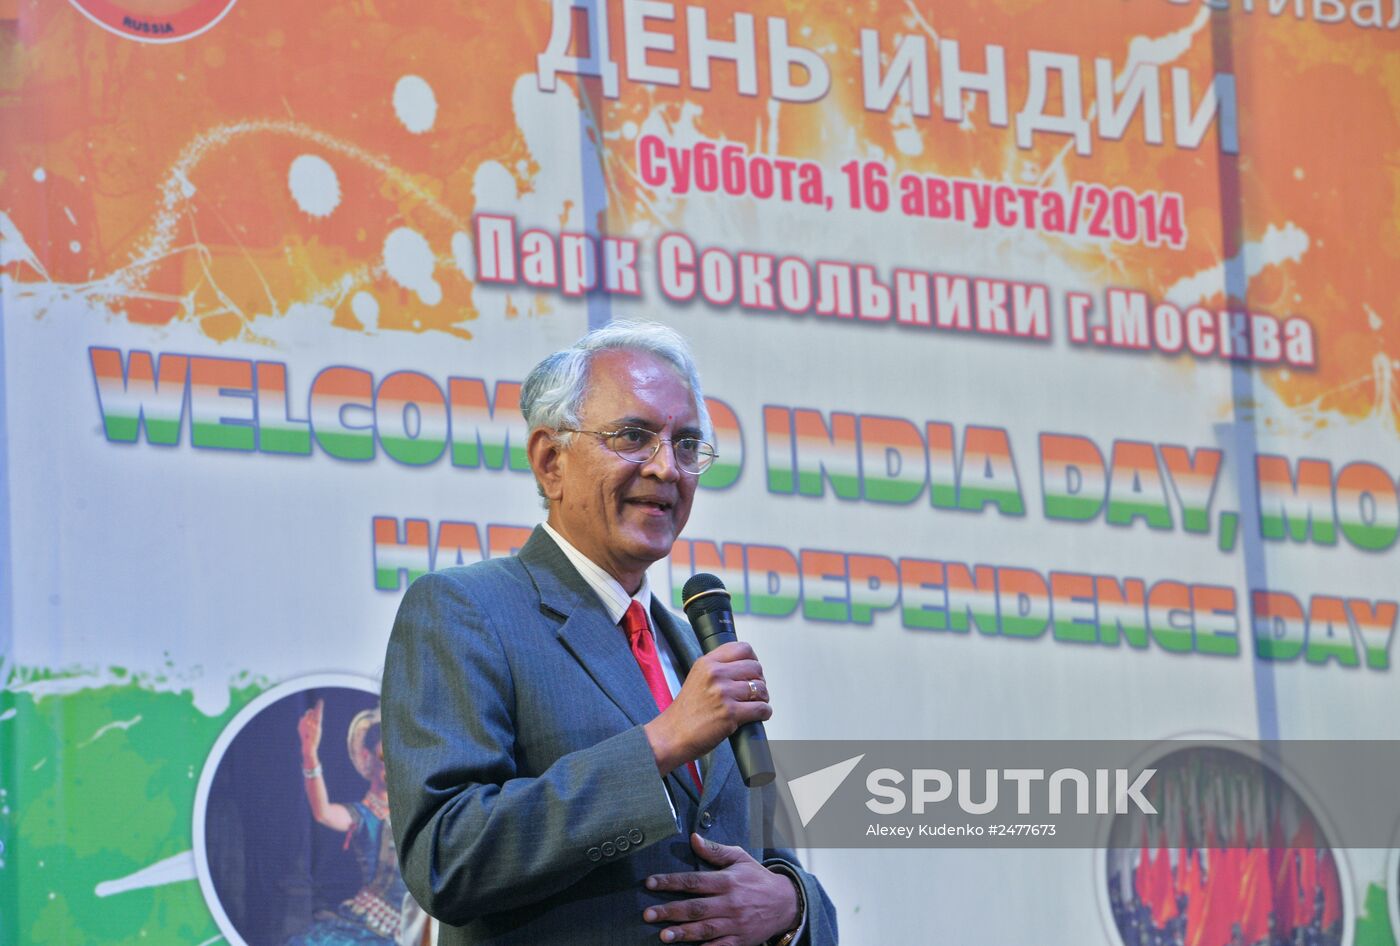 Indian Culture Festival in Sokolniki Park, Moscow